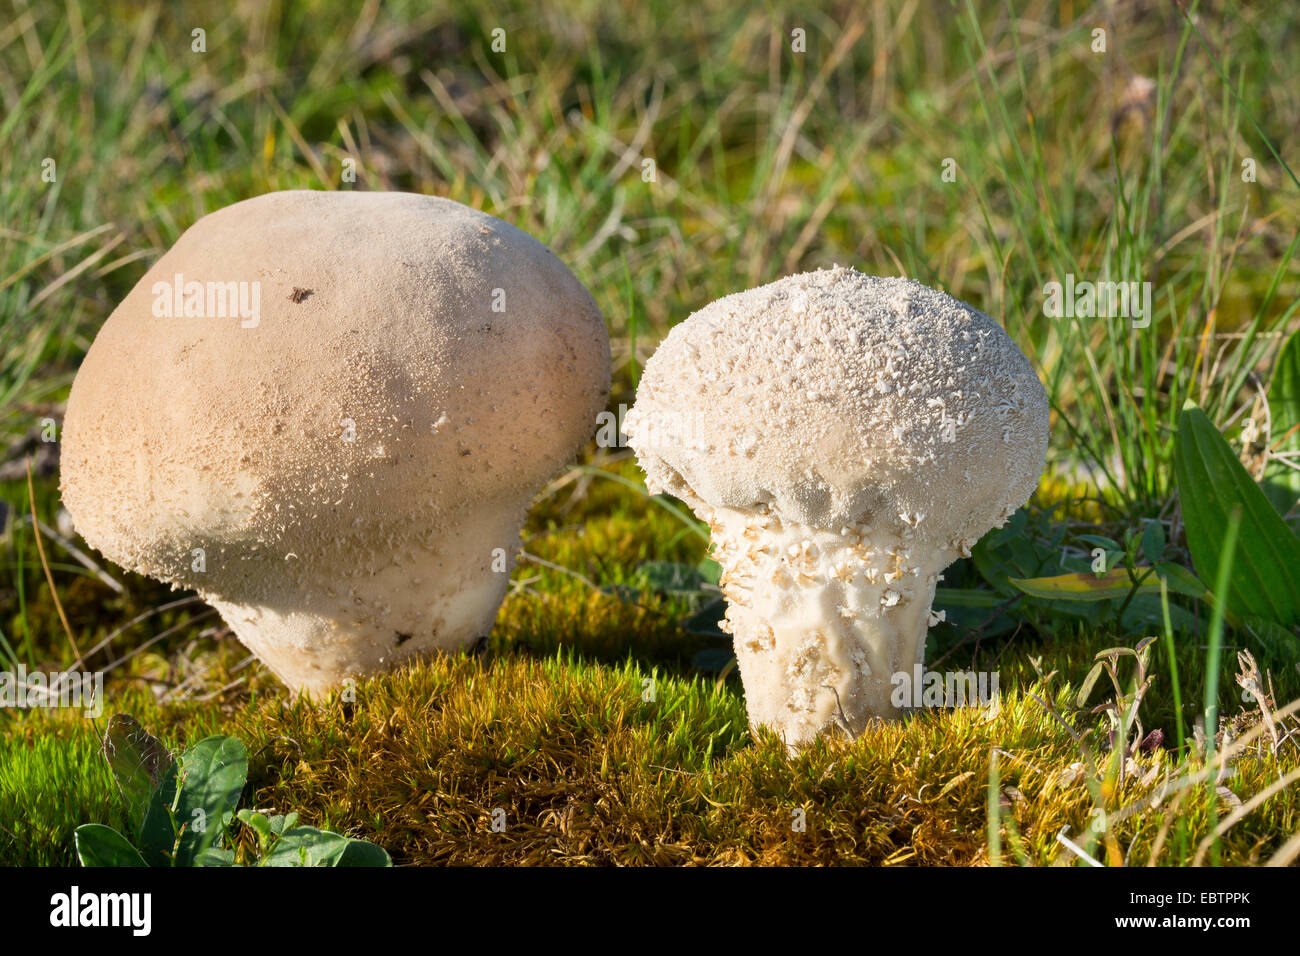 Pestle puffball (Calvatia excipuliformis, Calvatia saccata), two fruiting bodies on mossy ground, Germany Stock Photo